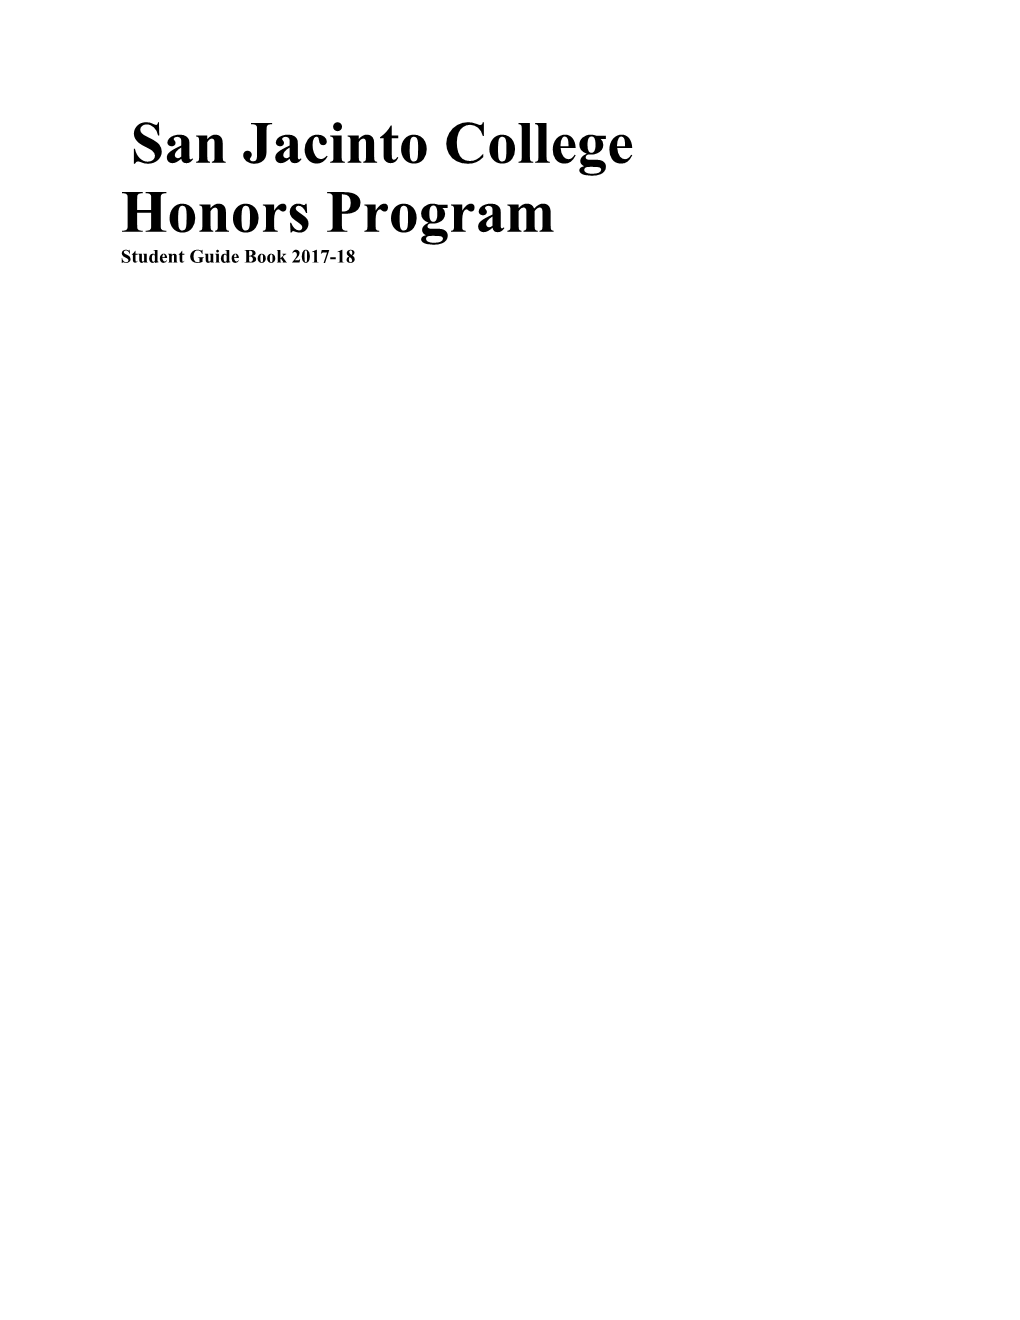 II. Honors Program Academic Criteria